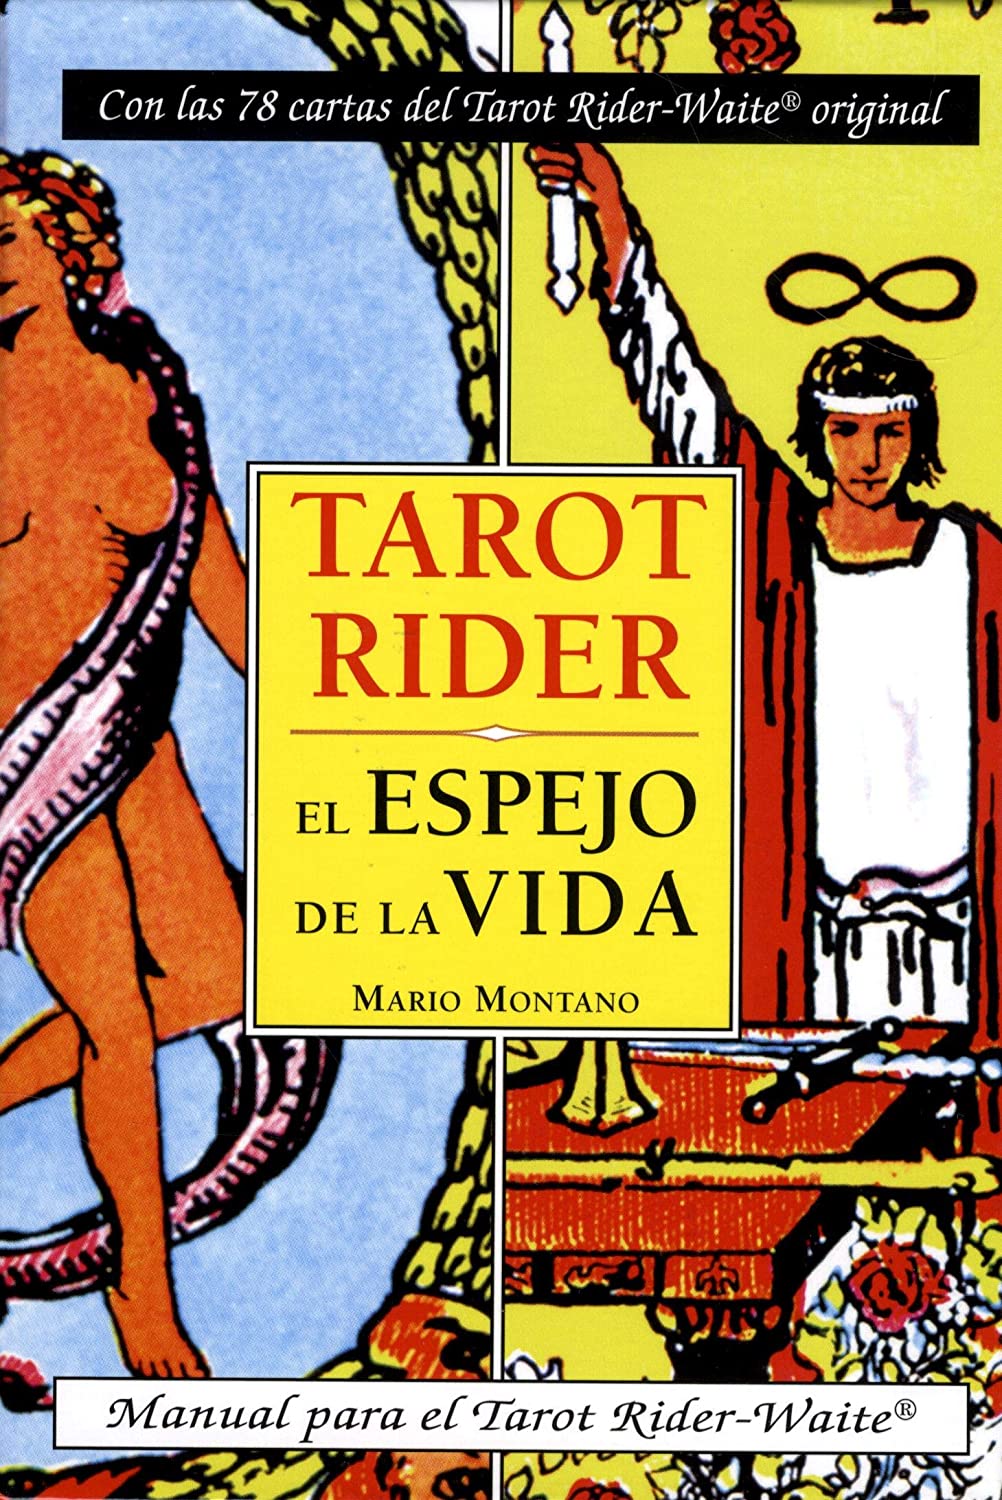 Tarot Rider - El espejo de la vida (estuche) - Antevasin's Store